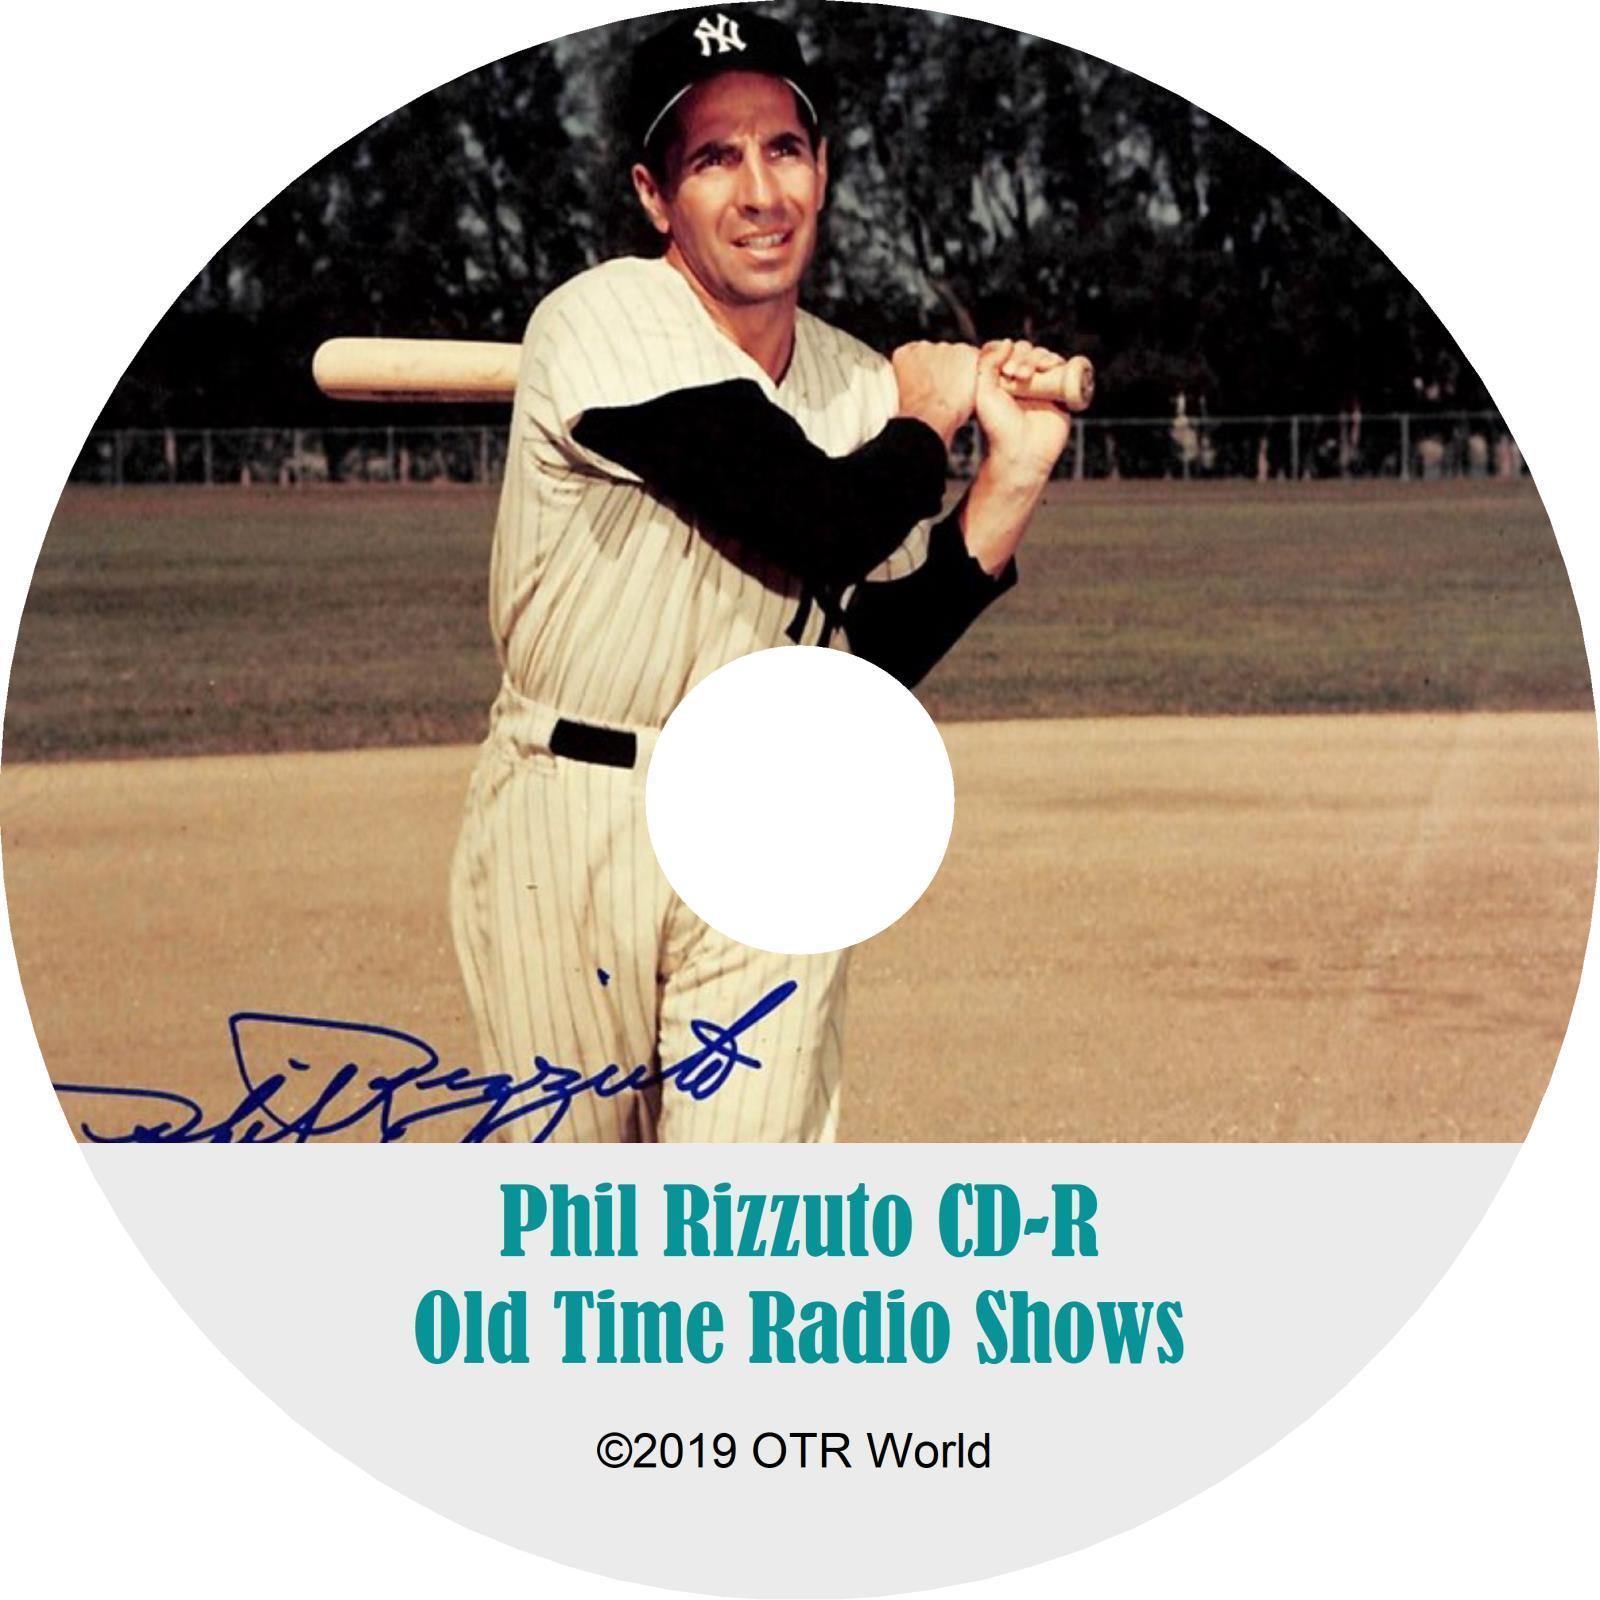 Phil Rizzuto Sports Caravan OTR Old Time Radio Shows MP3 On CD 3 Episodes - OTR World